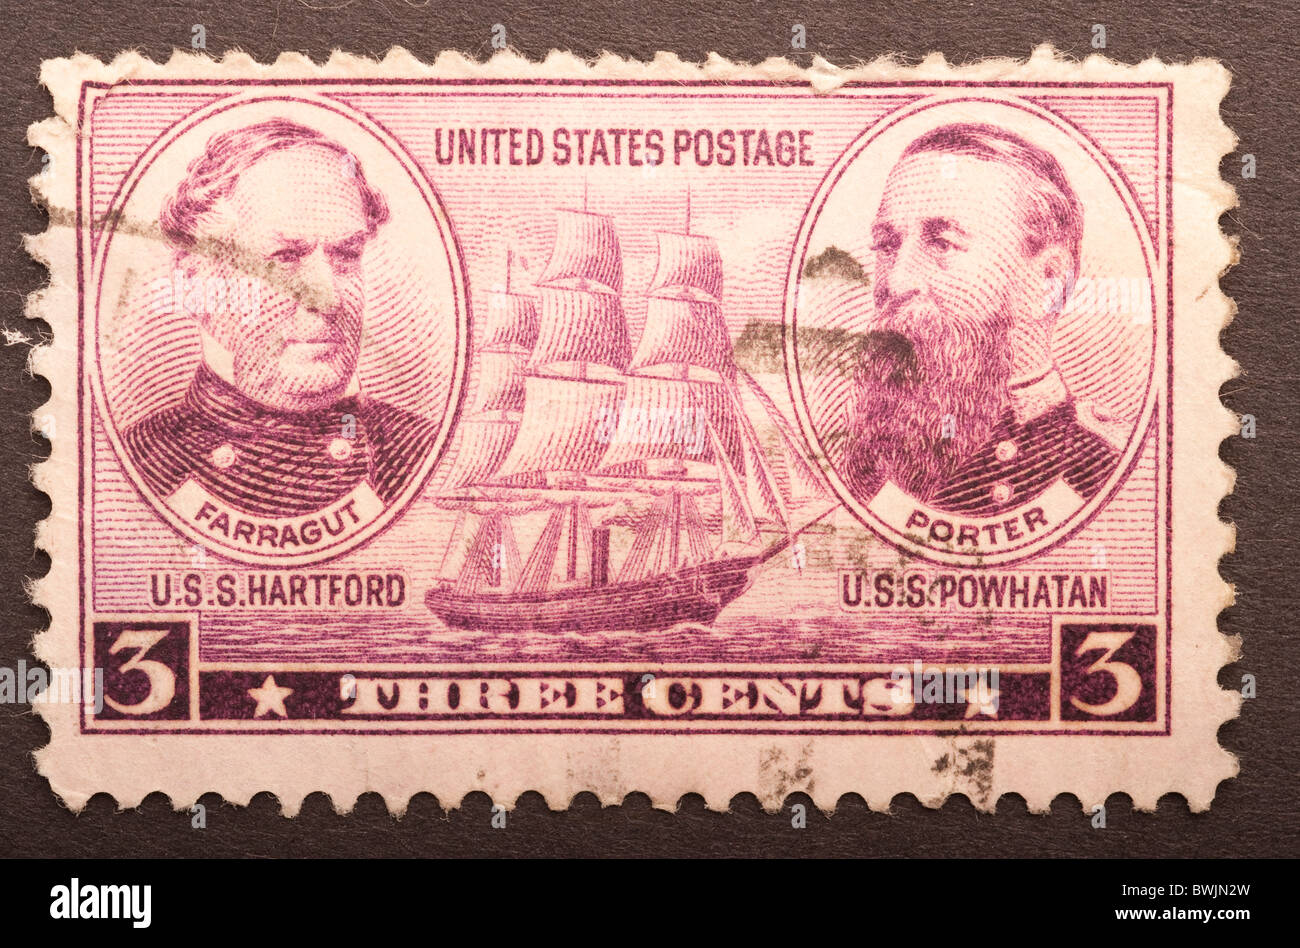 United States Postage 3 cents Stock Photo